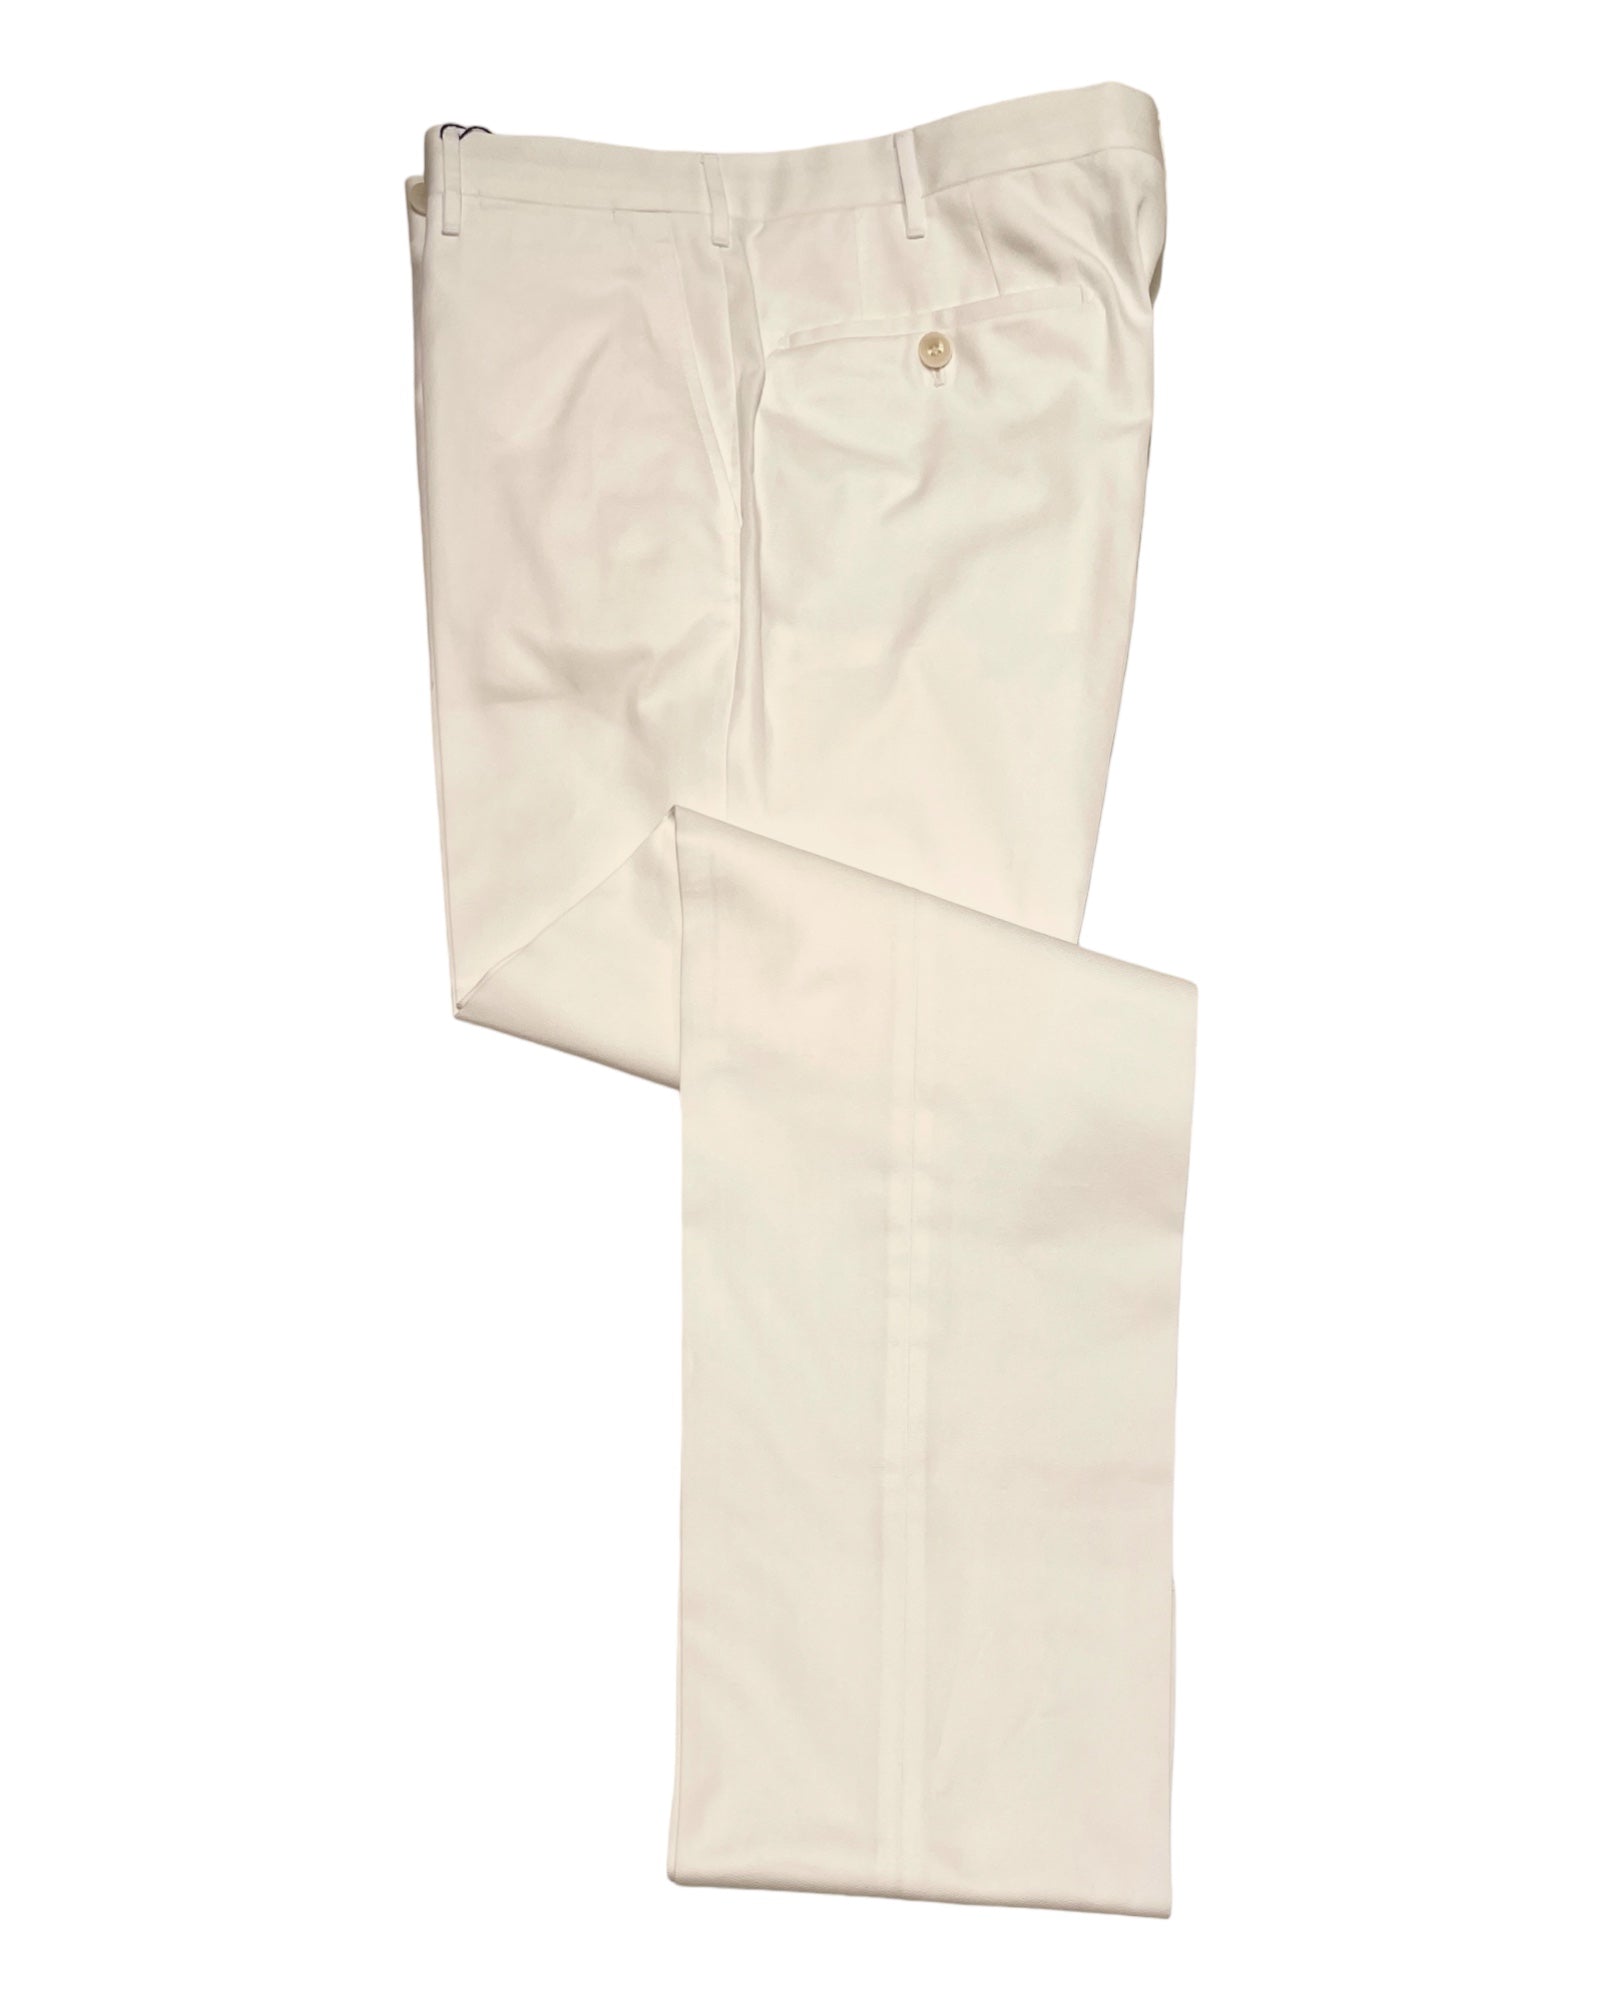 Flat Front Sartorial Cotton Pant - White DRESS PANTS50 EU